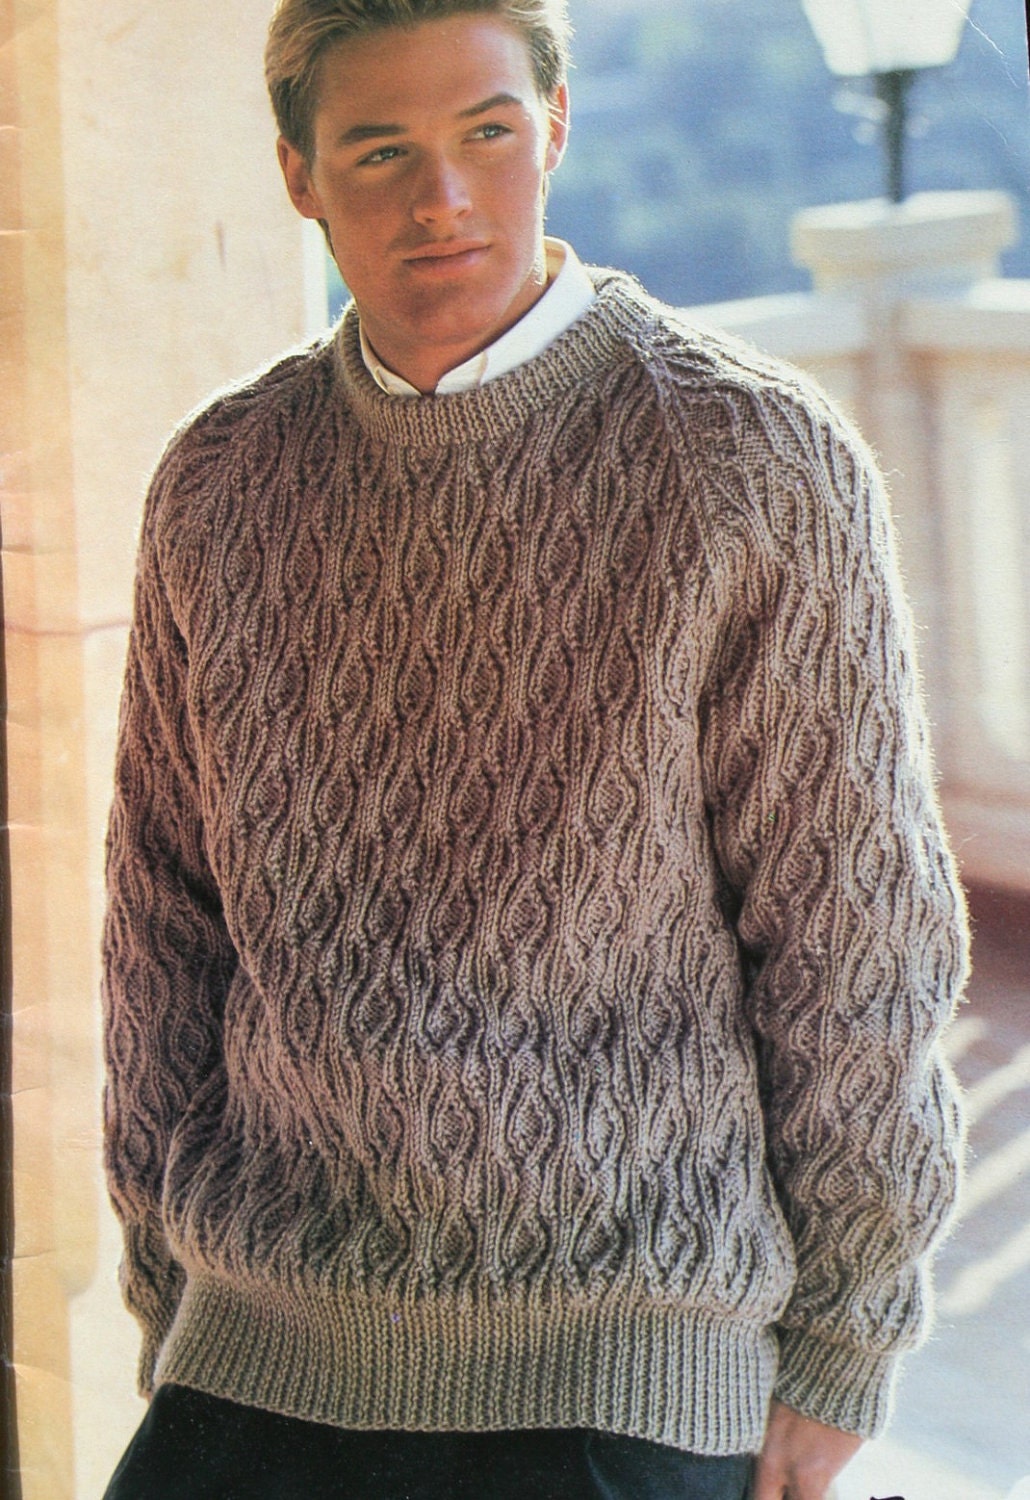 Easy sweater knitting patterns, Knitting designs, Sweater knitting patterns